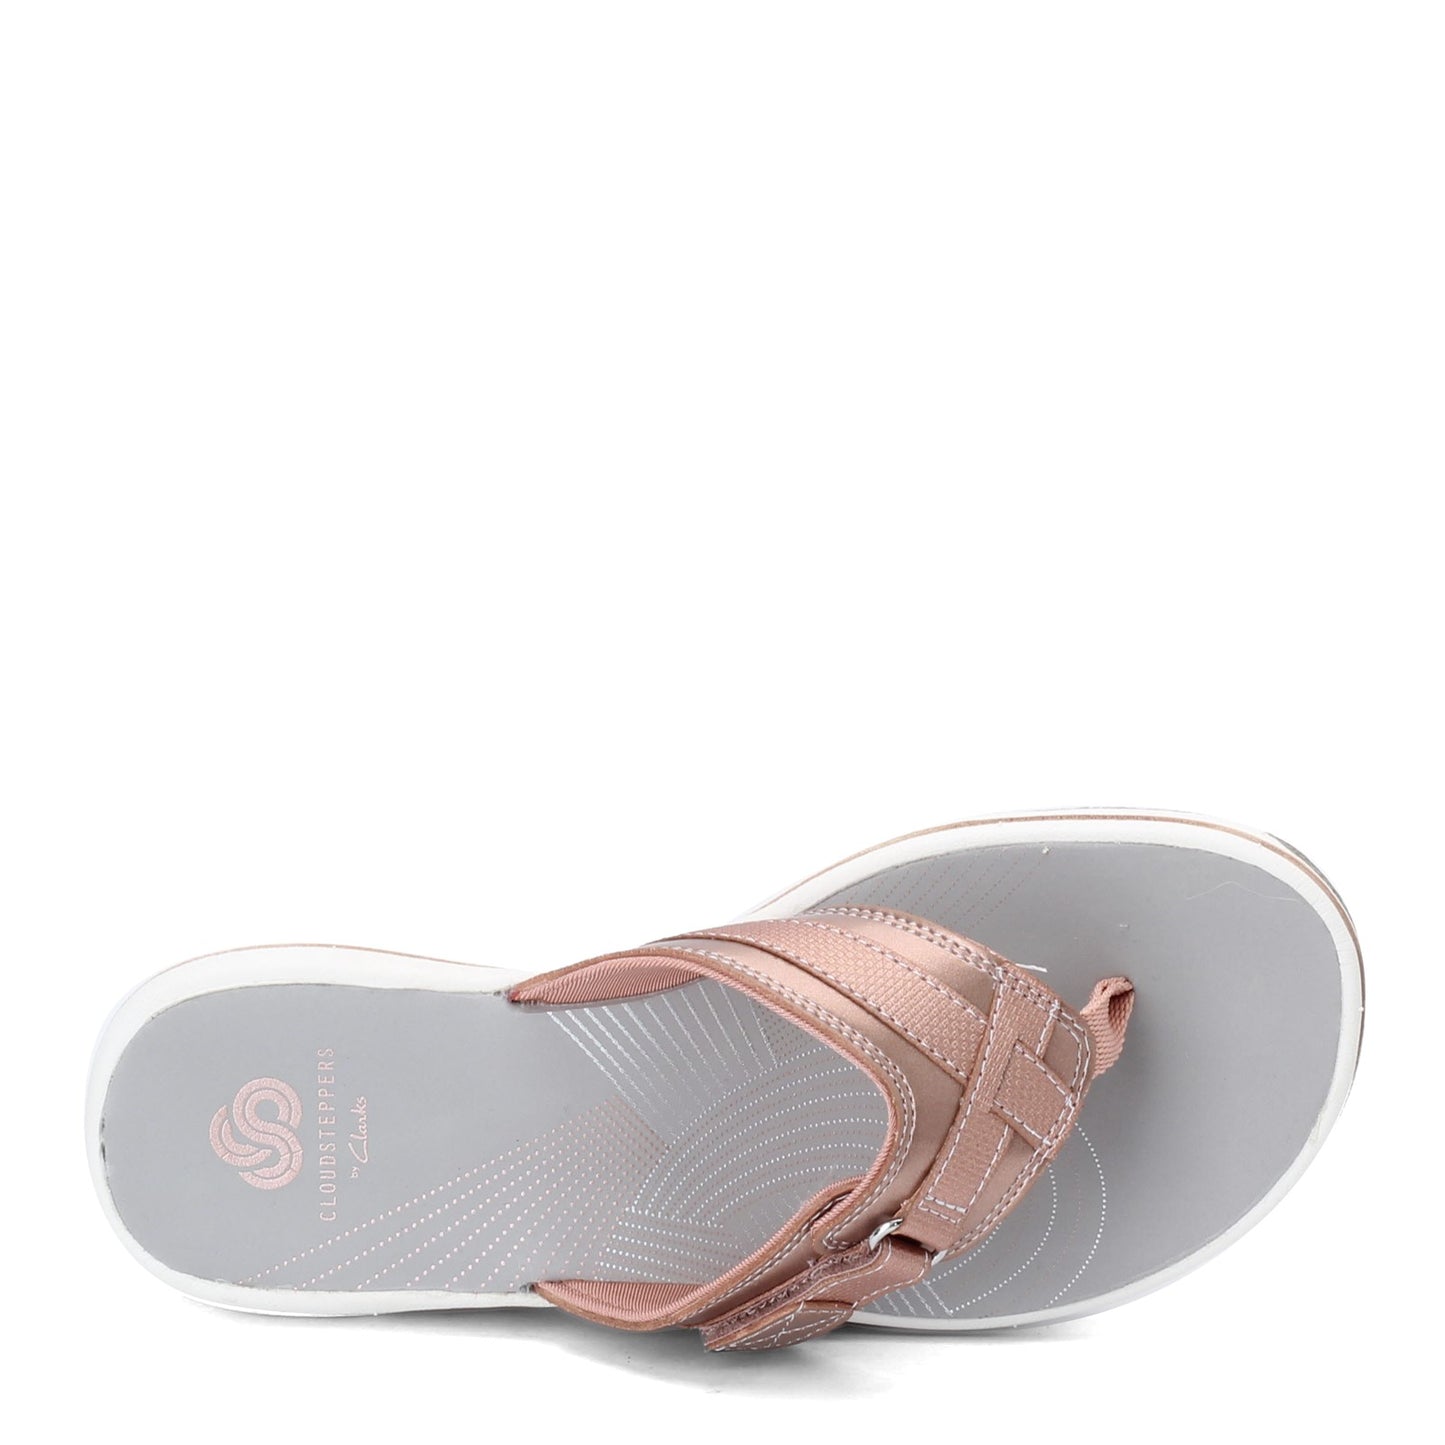 Peltz Shoes  Women's Clarks Breeze Sea Sandal ROSE GOLD 26142608